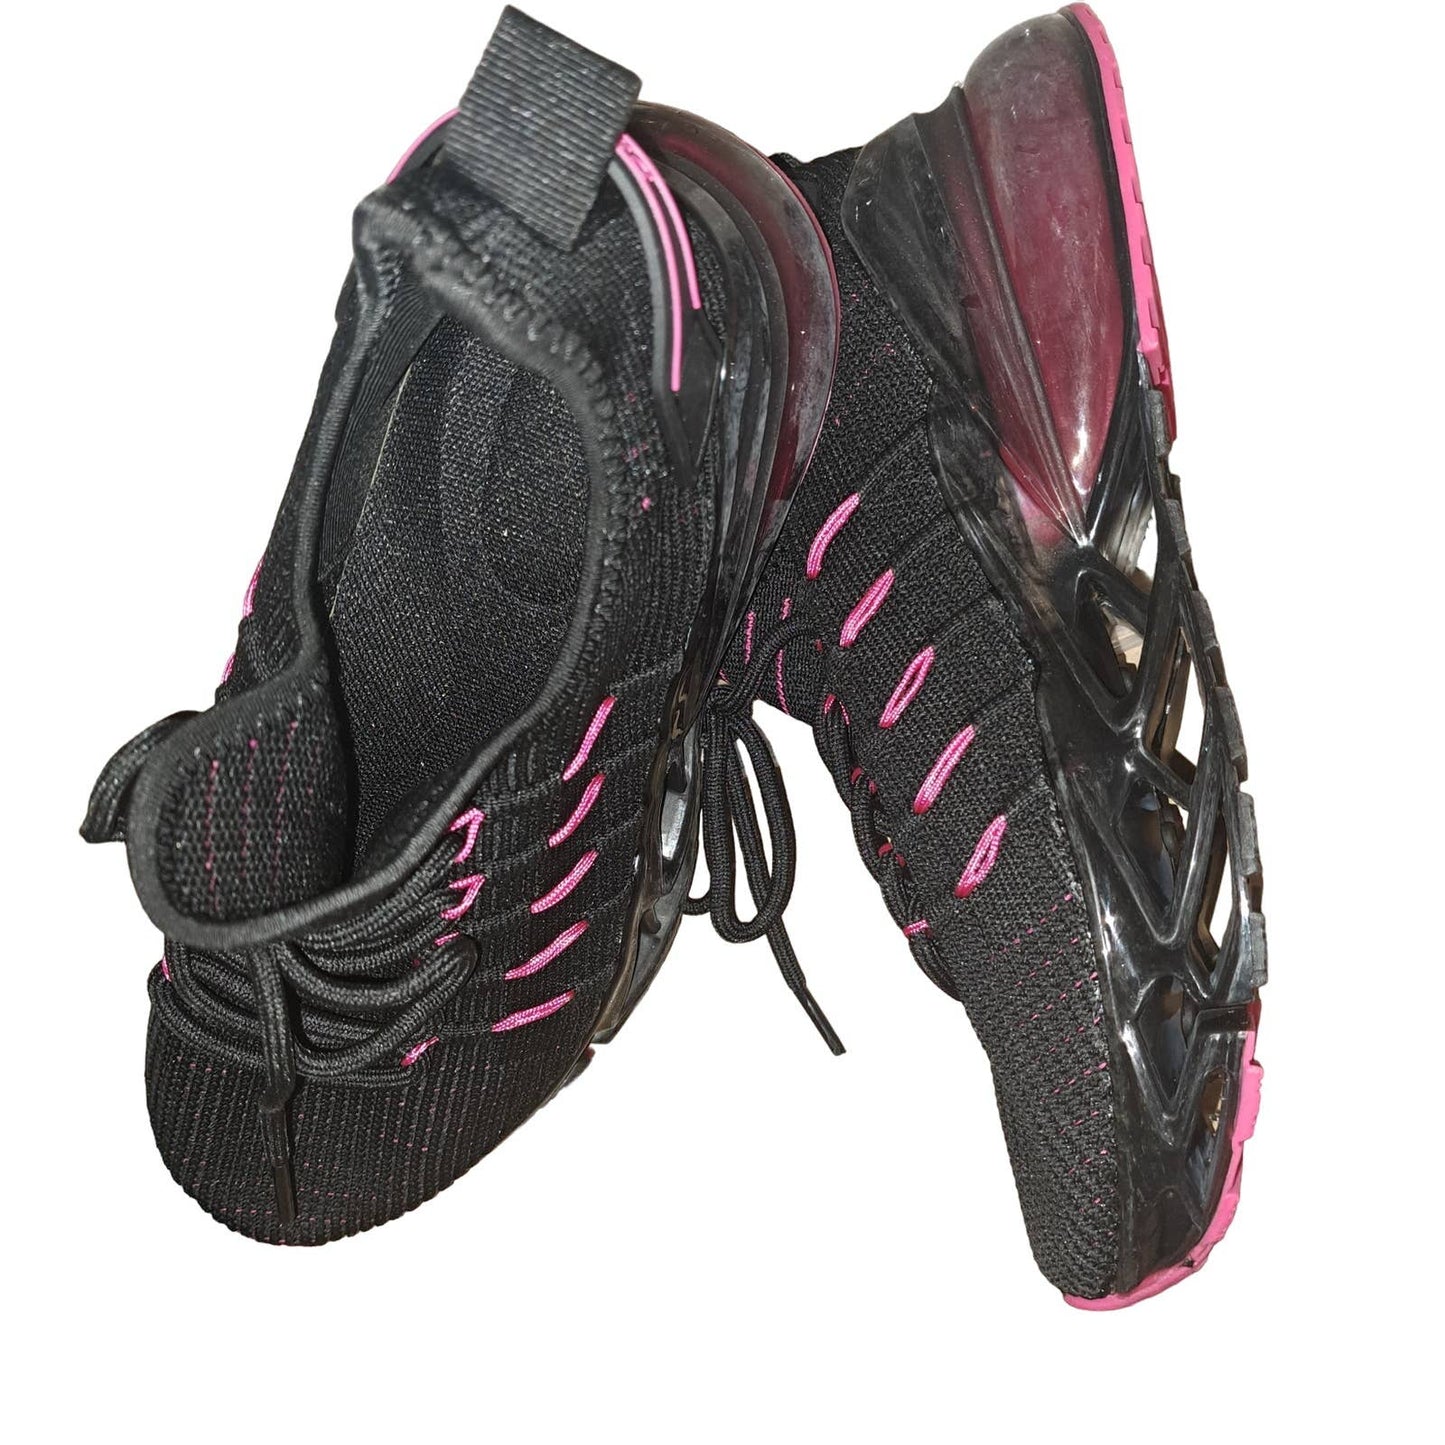 Deevike Running Shoes-Trainers-Sports Shoes 36EU- 6 US